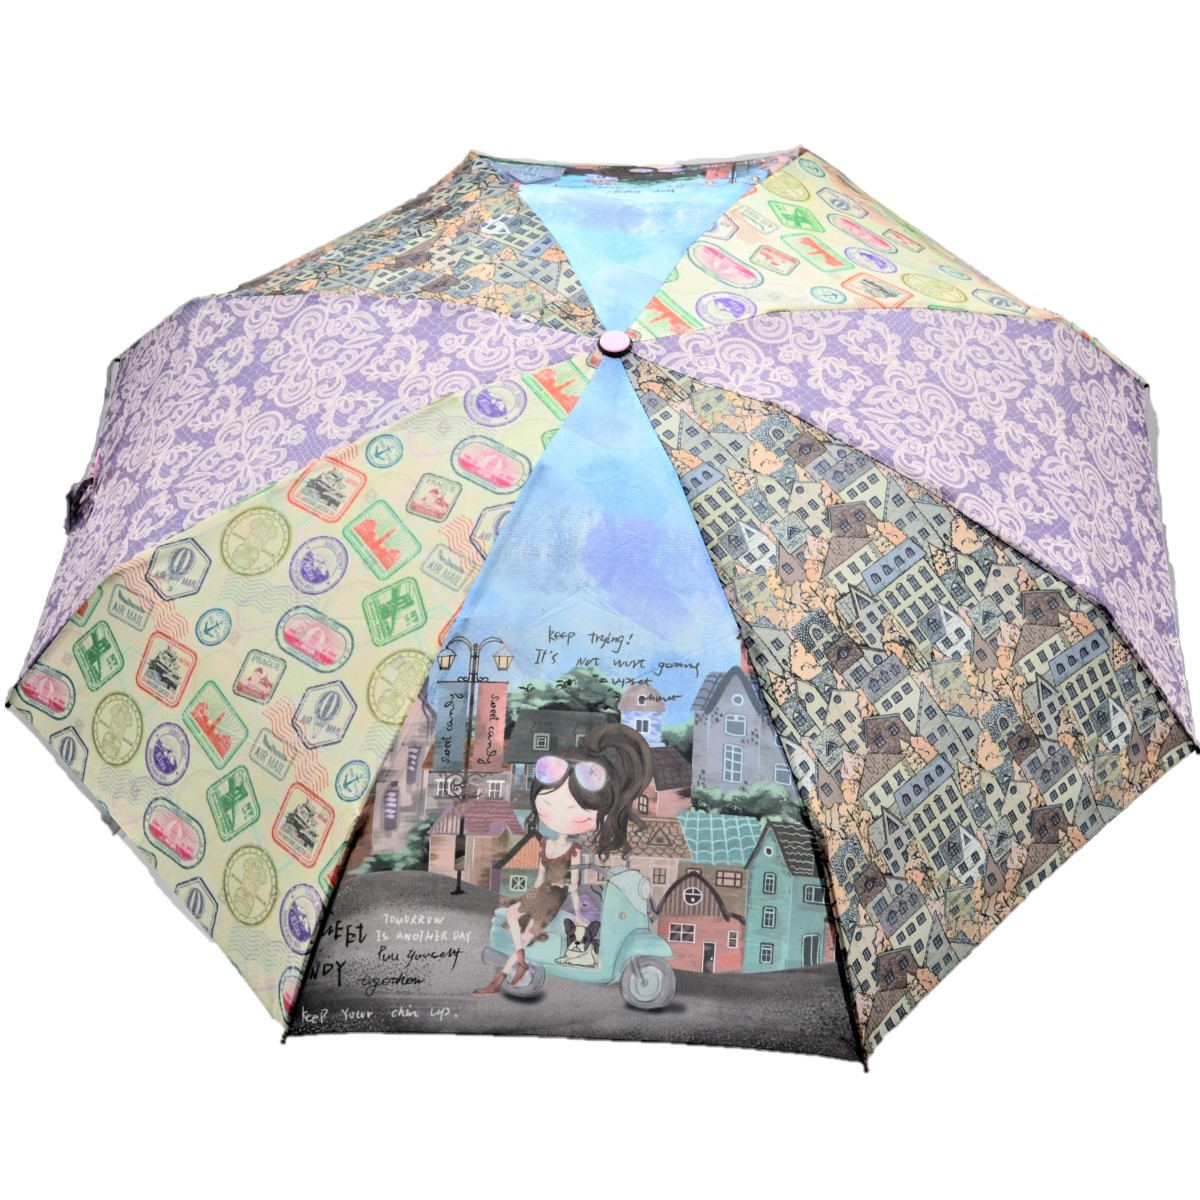 Sweet Candy esernyő tokban 98 cm - Vespa